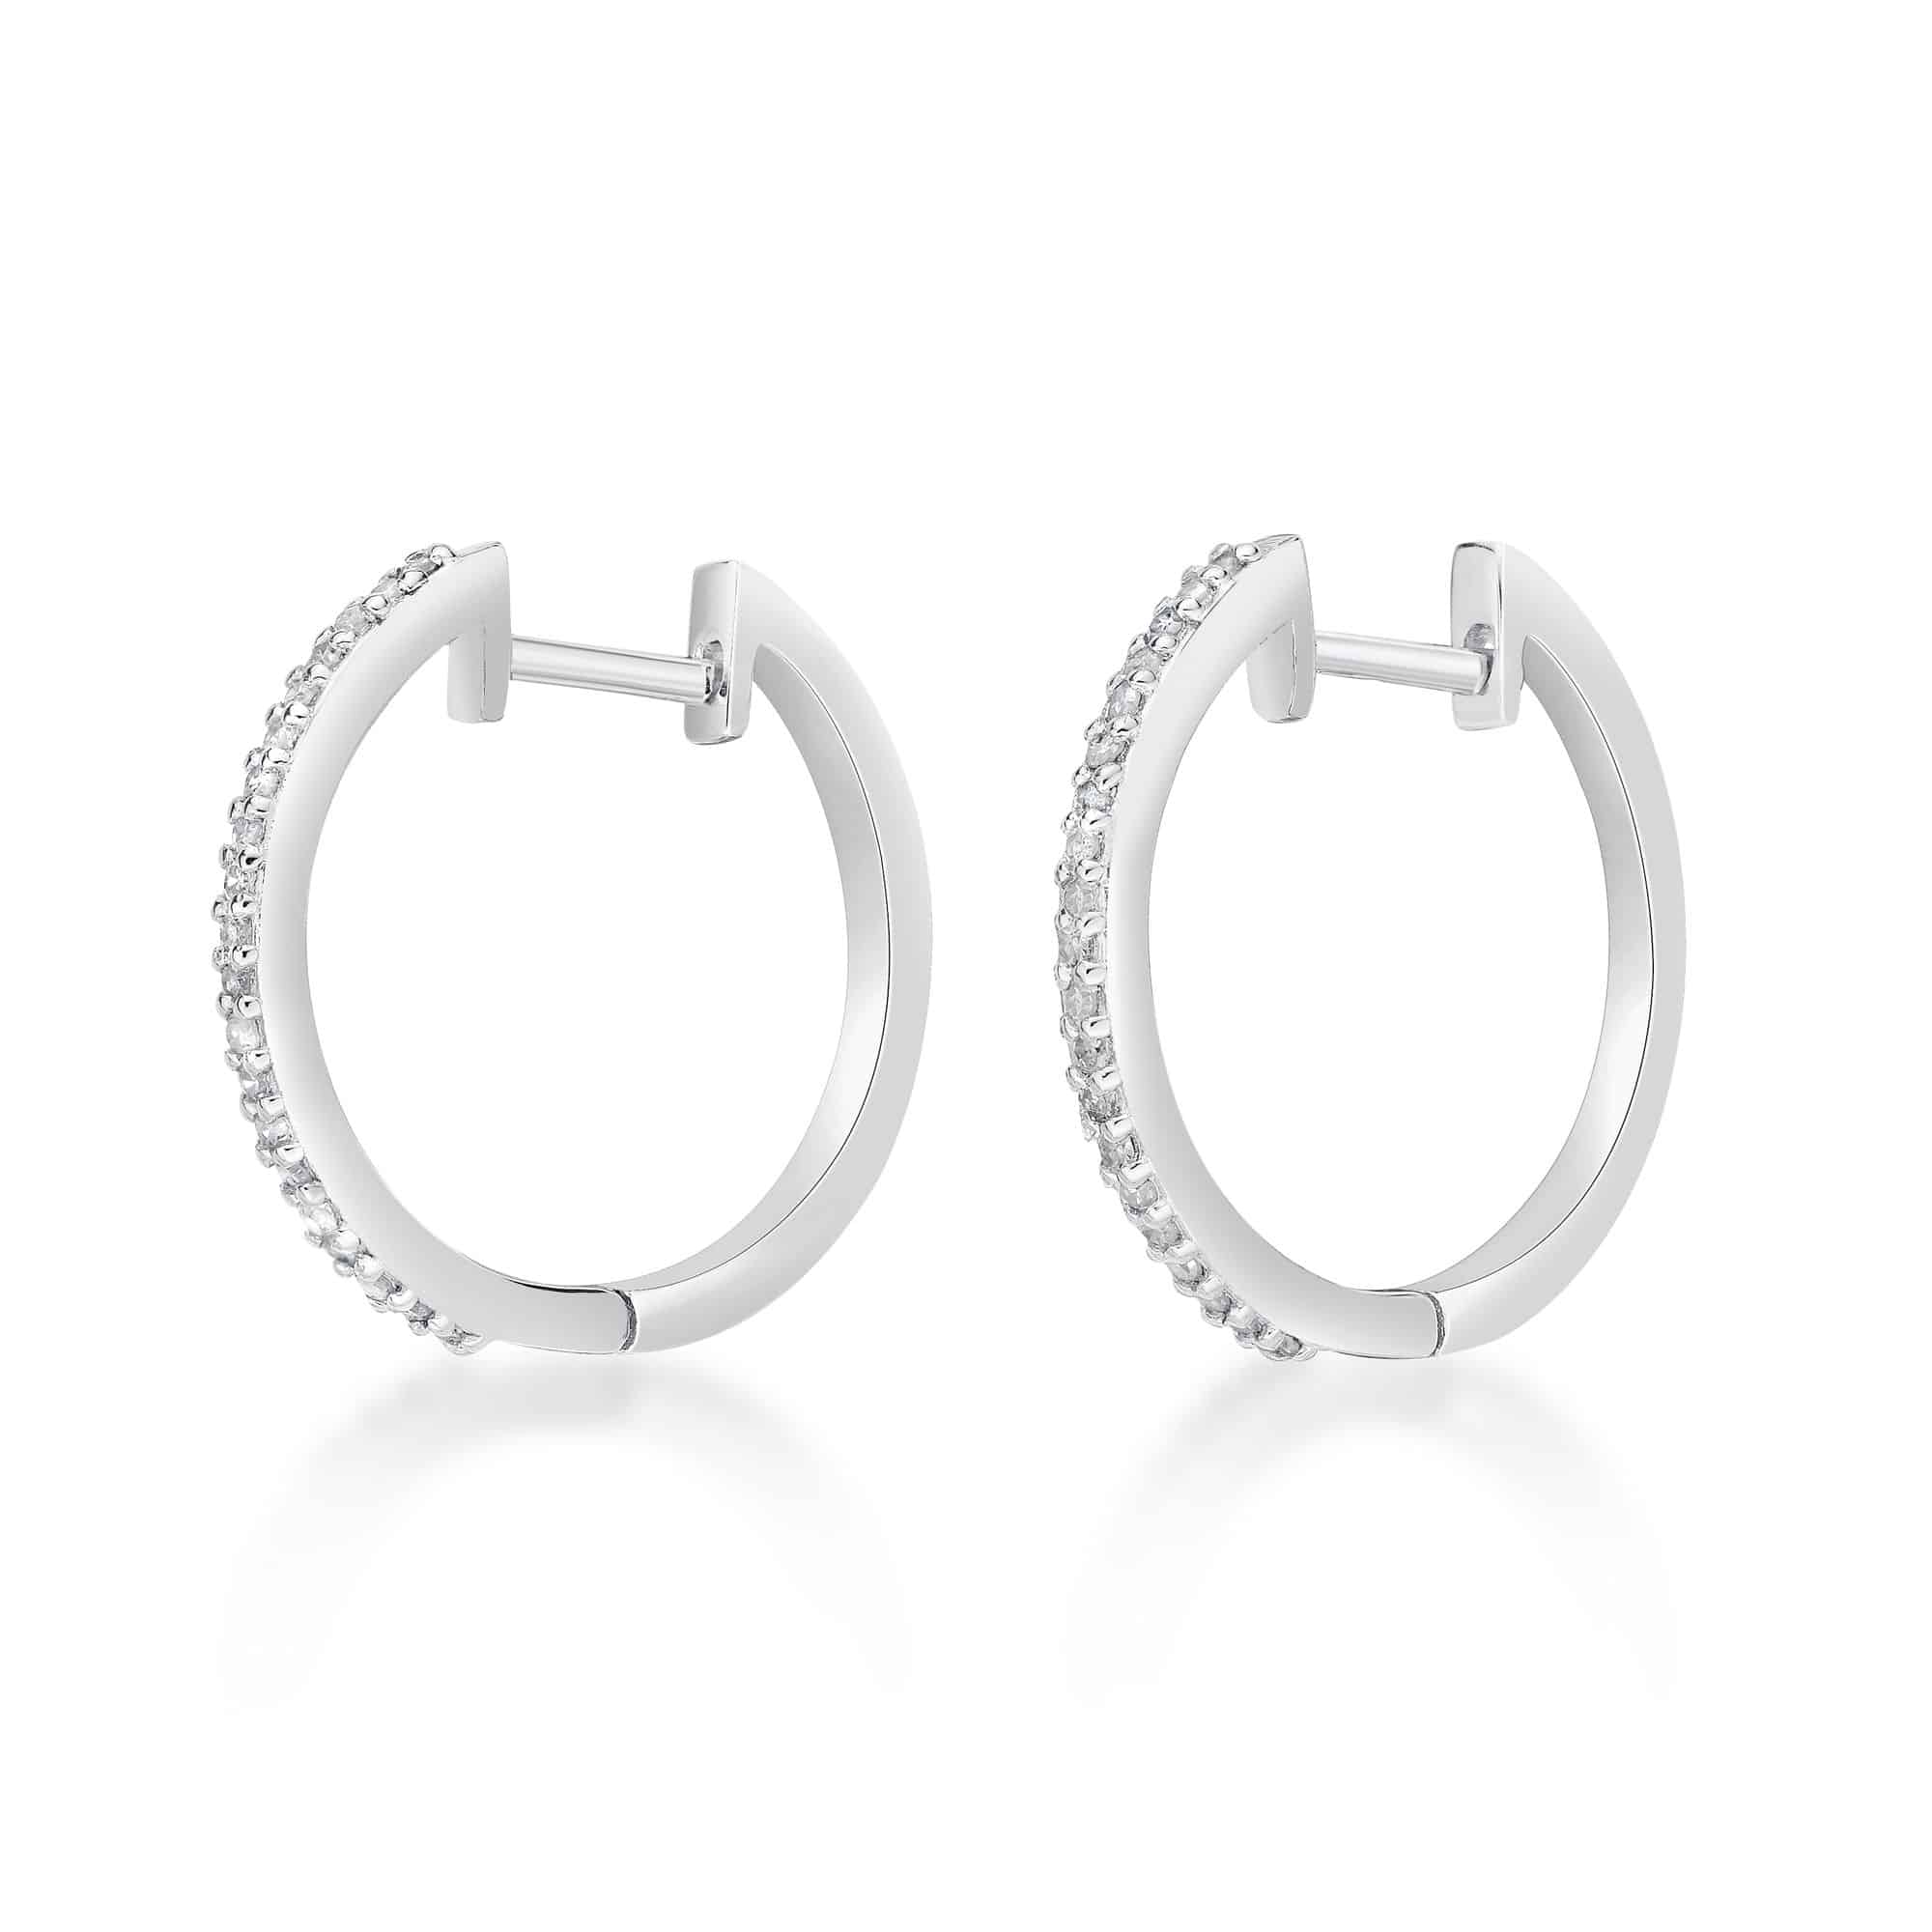 Women's Diamond Hoop Earrings, Sterling Silver, .16 Cttw, 17 MM | Lavari Jewelers